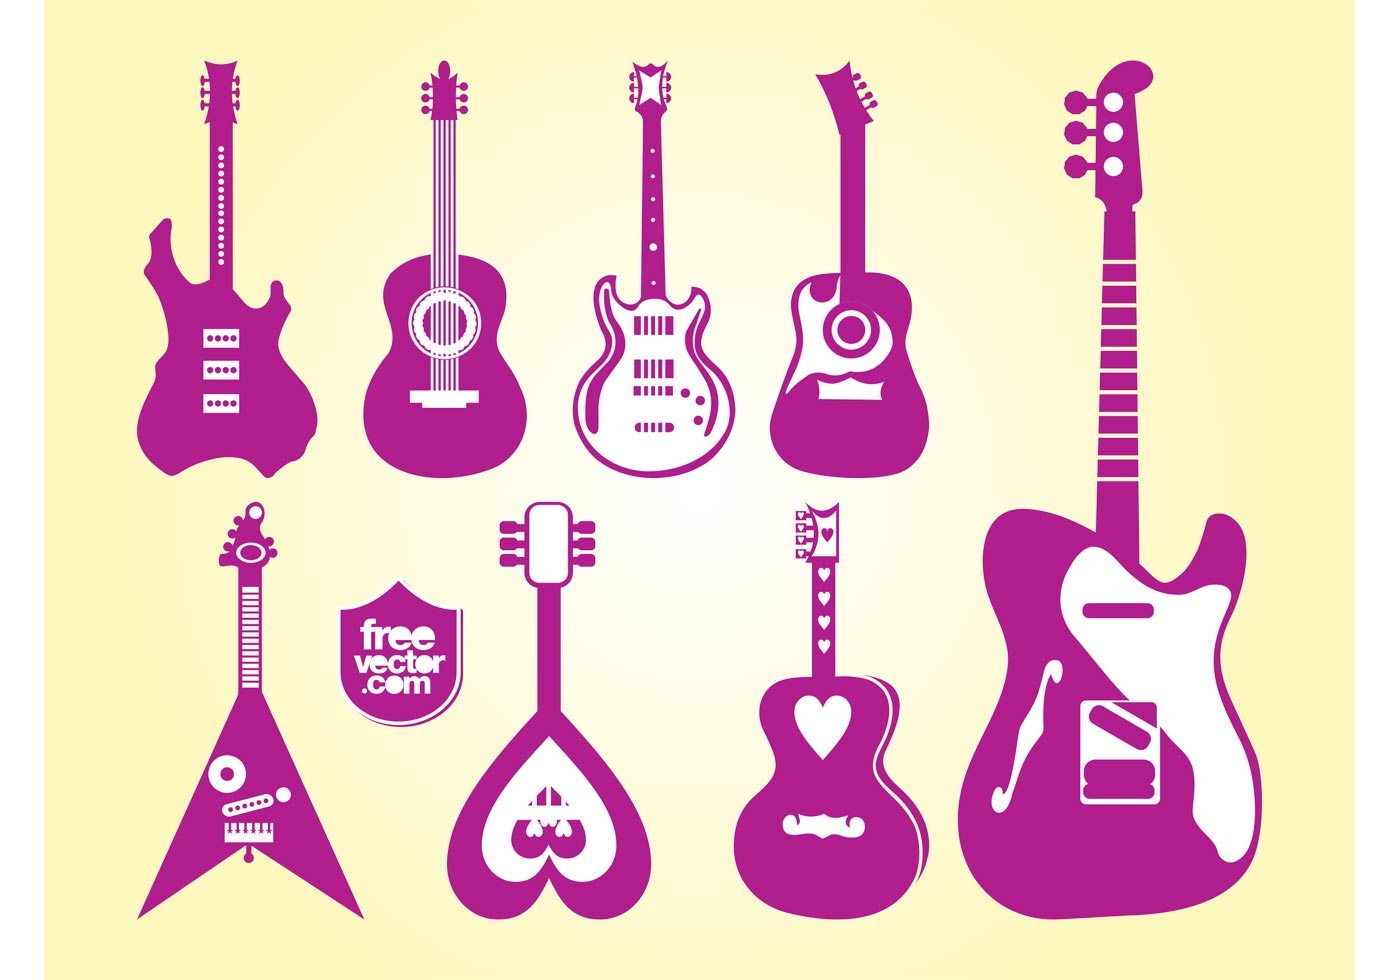 Download Guitars Vectors - Download Free Vector Art, Stock Graphics ...